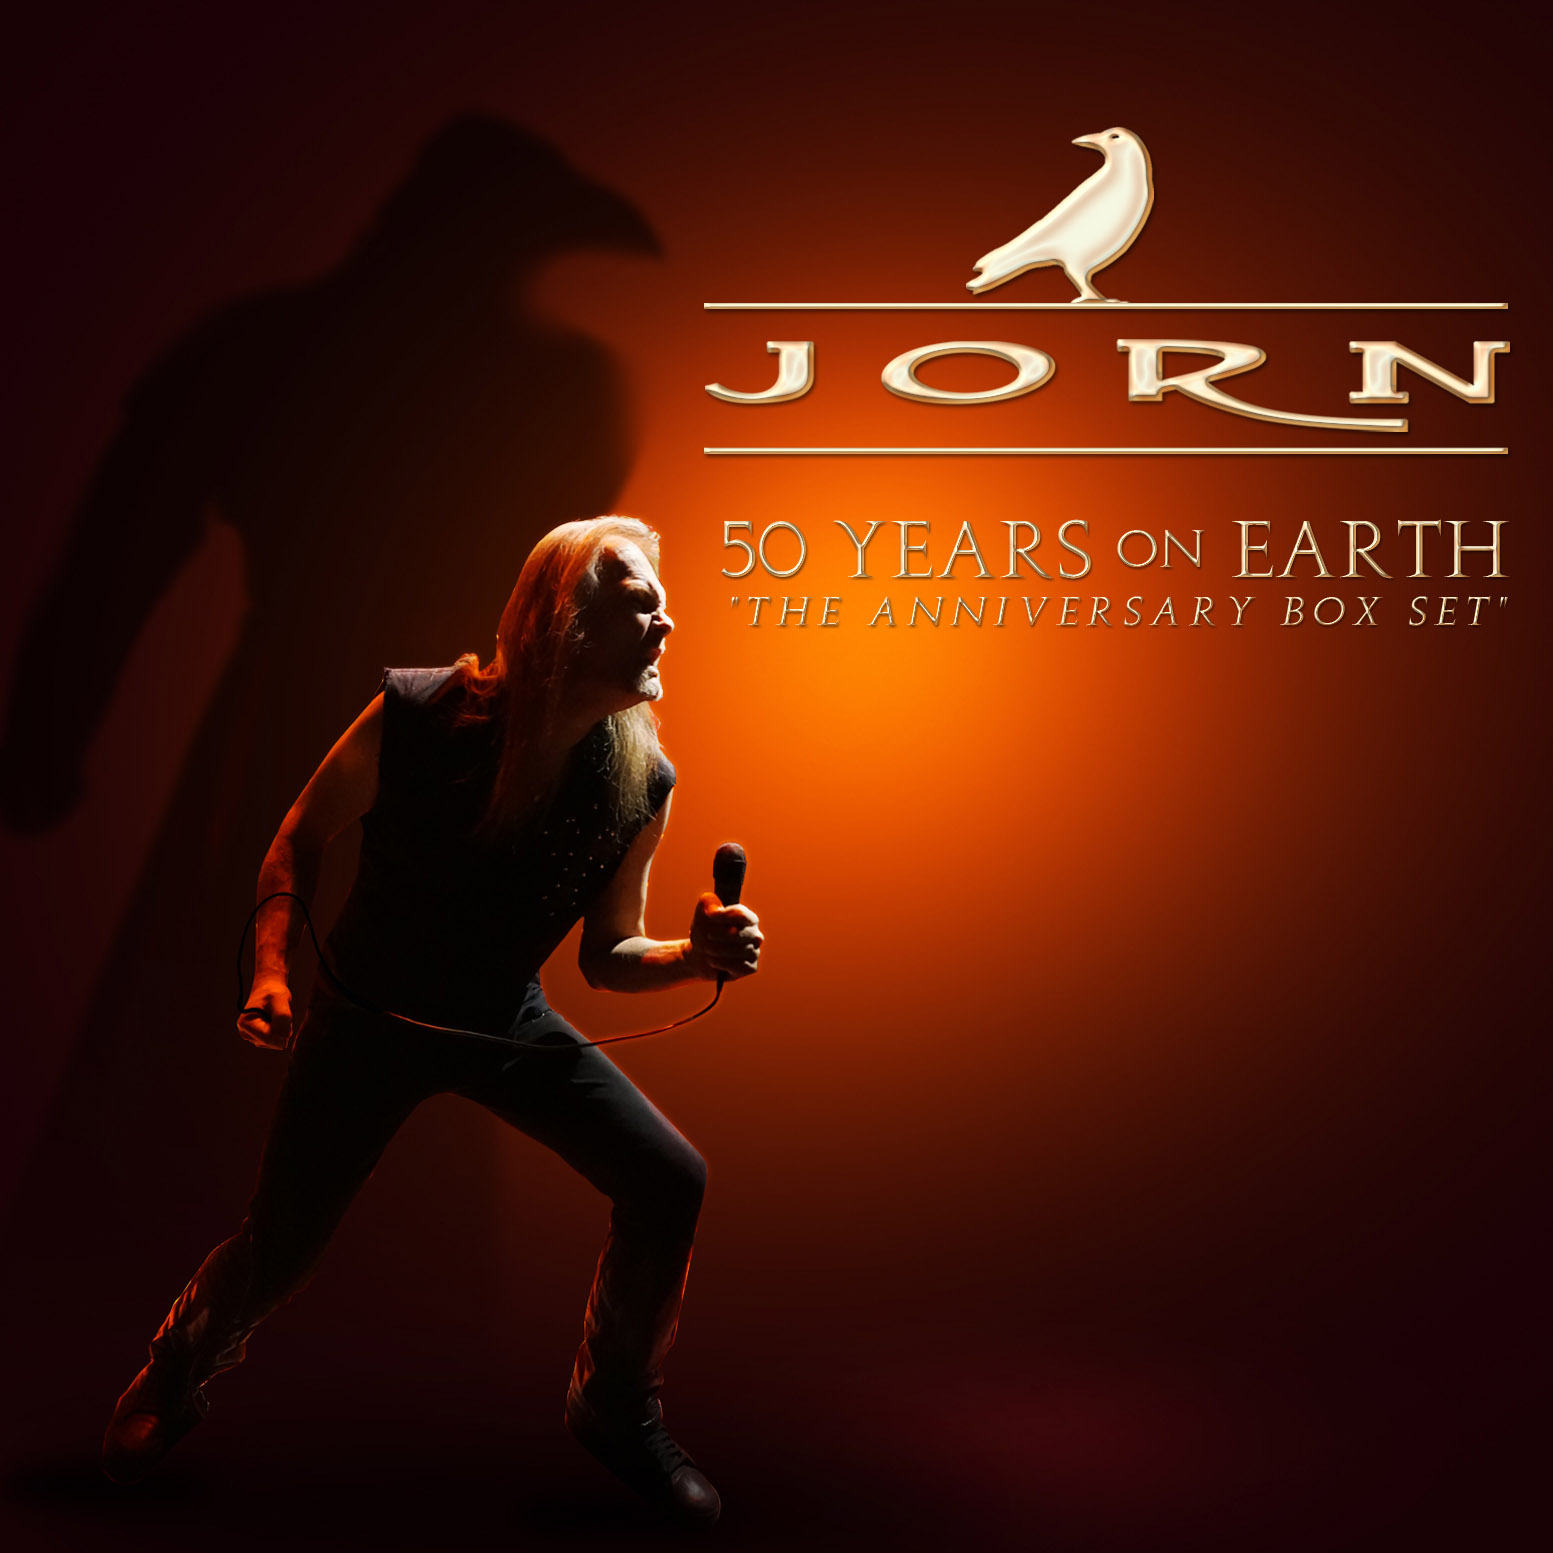 Jorn - “50 Years On Earth - The Anniversary Box Set”